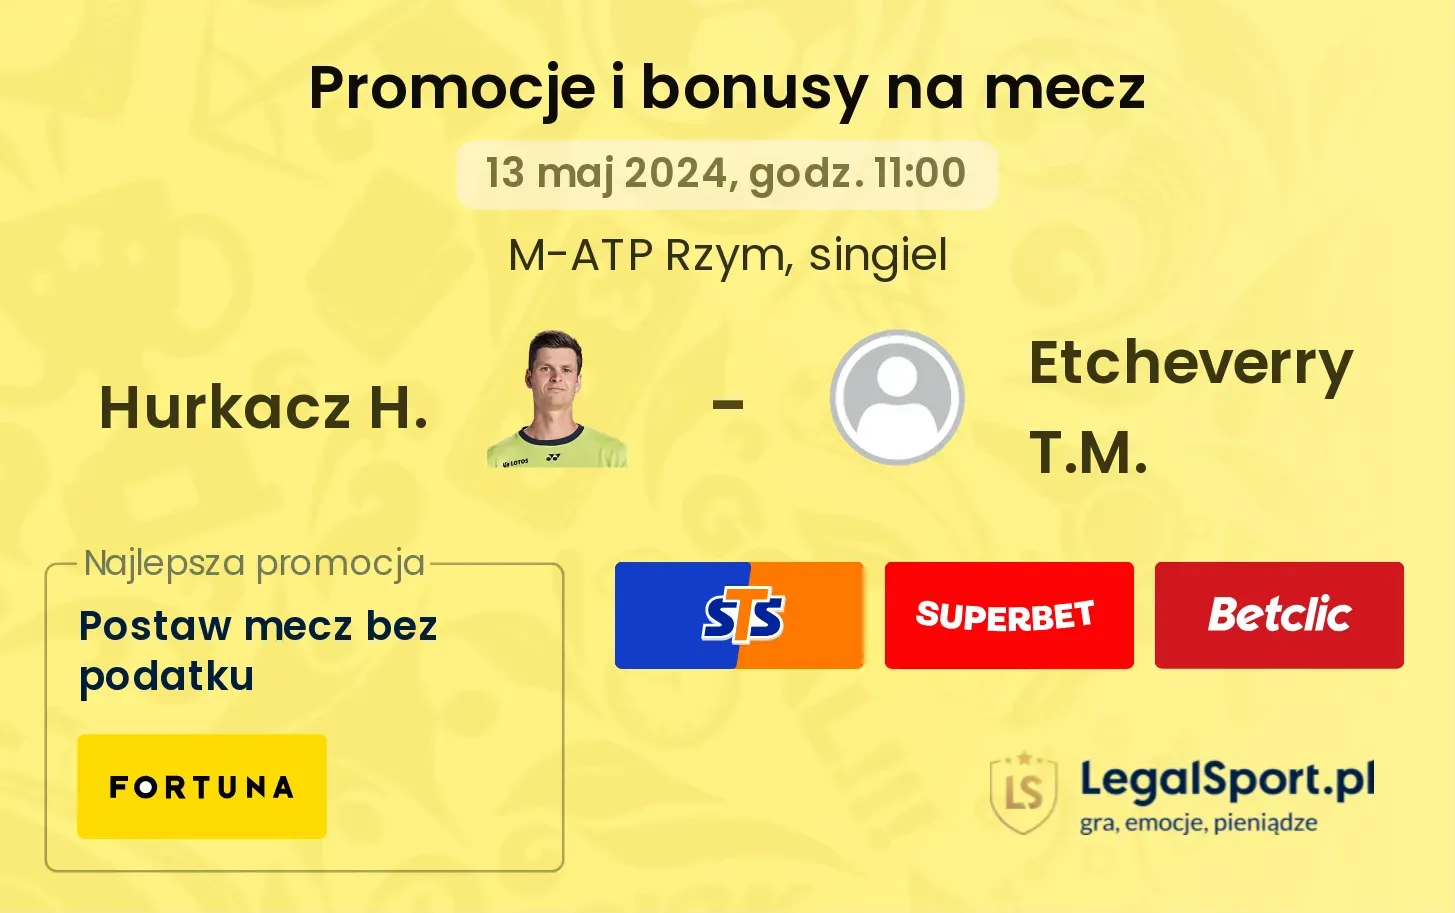 Hurkacz H. - Etcheverry T.M. bonusy i promocje (13.05, 11:00)